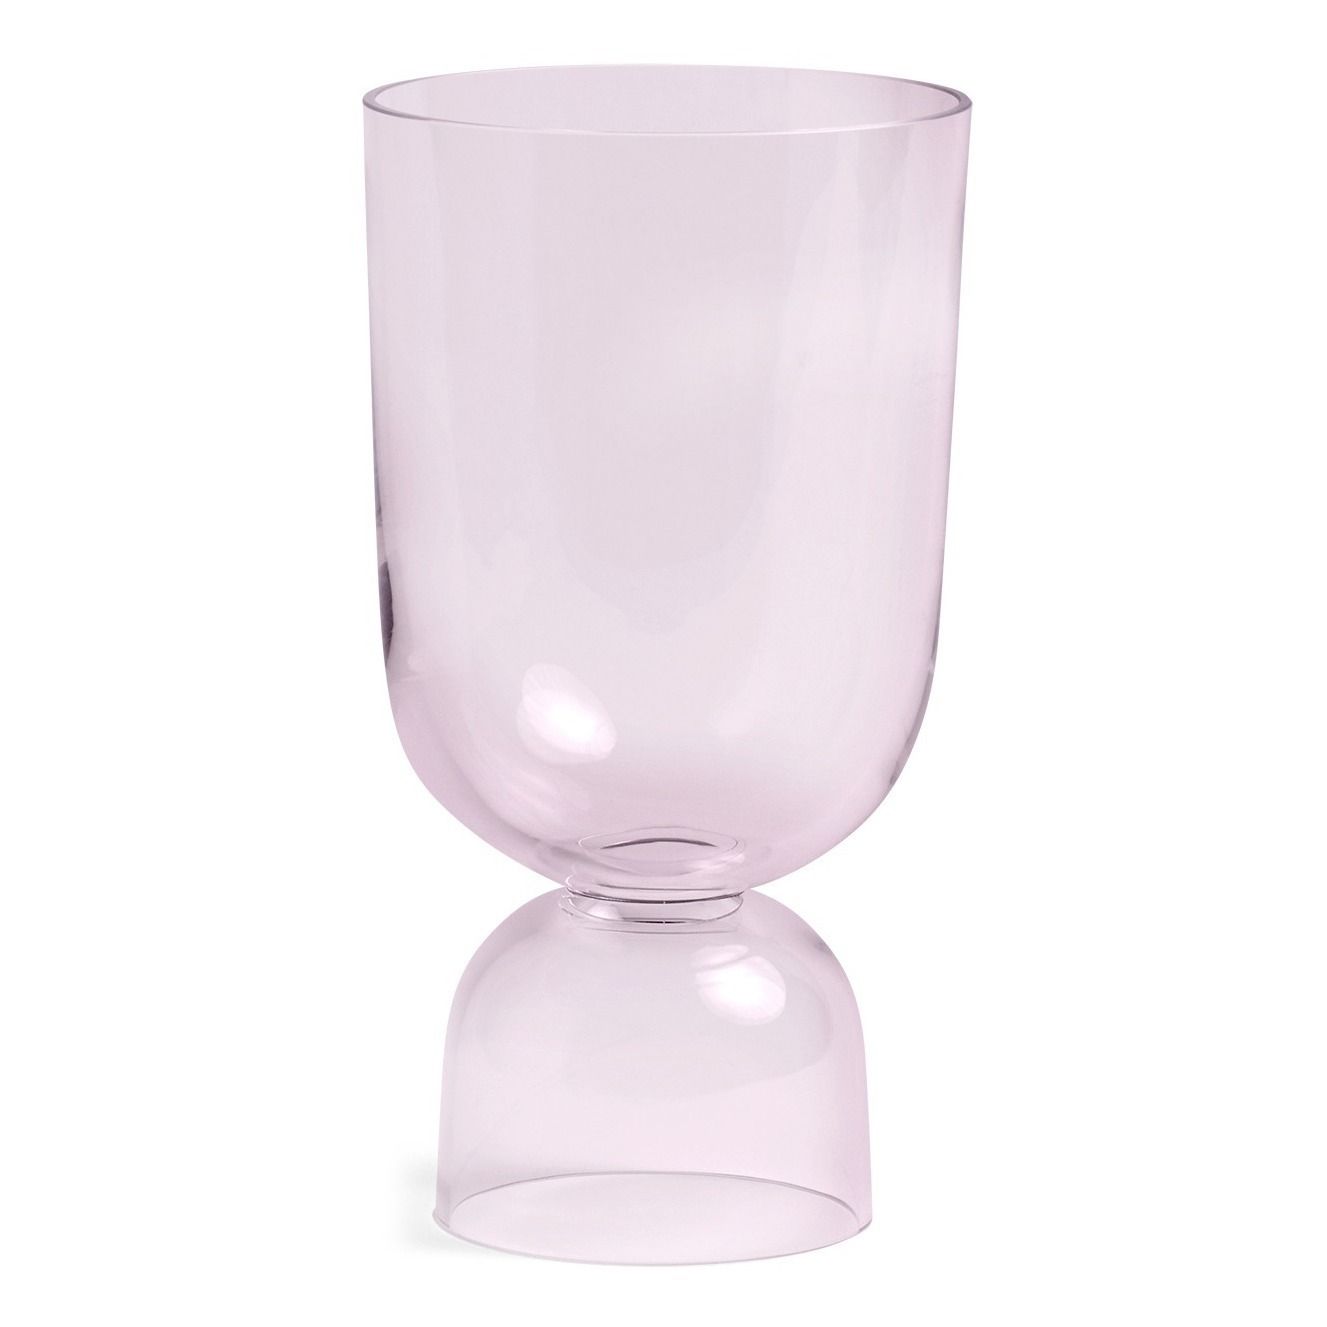 Hay - Vase Bottoms Up en verre - Rose pâle